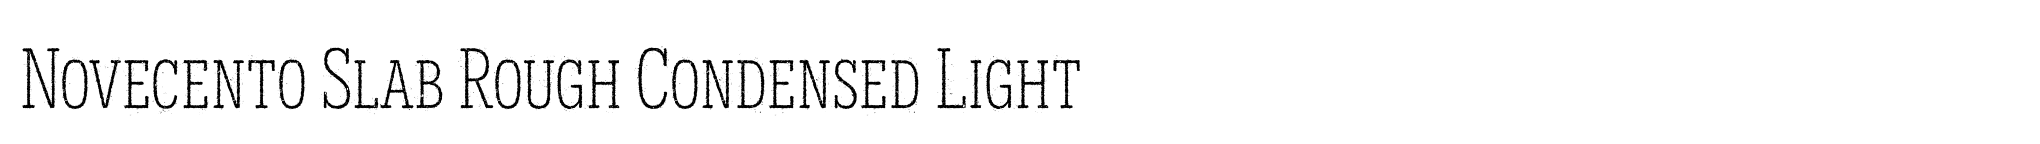 Novecento Slab Rough Condensed Light image